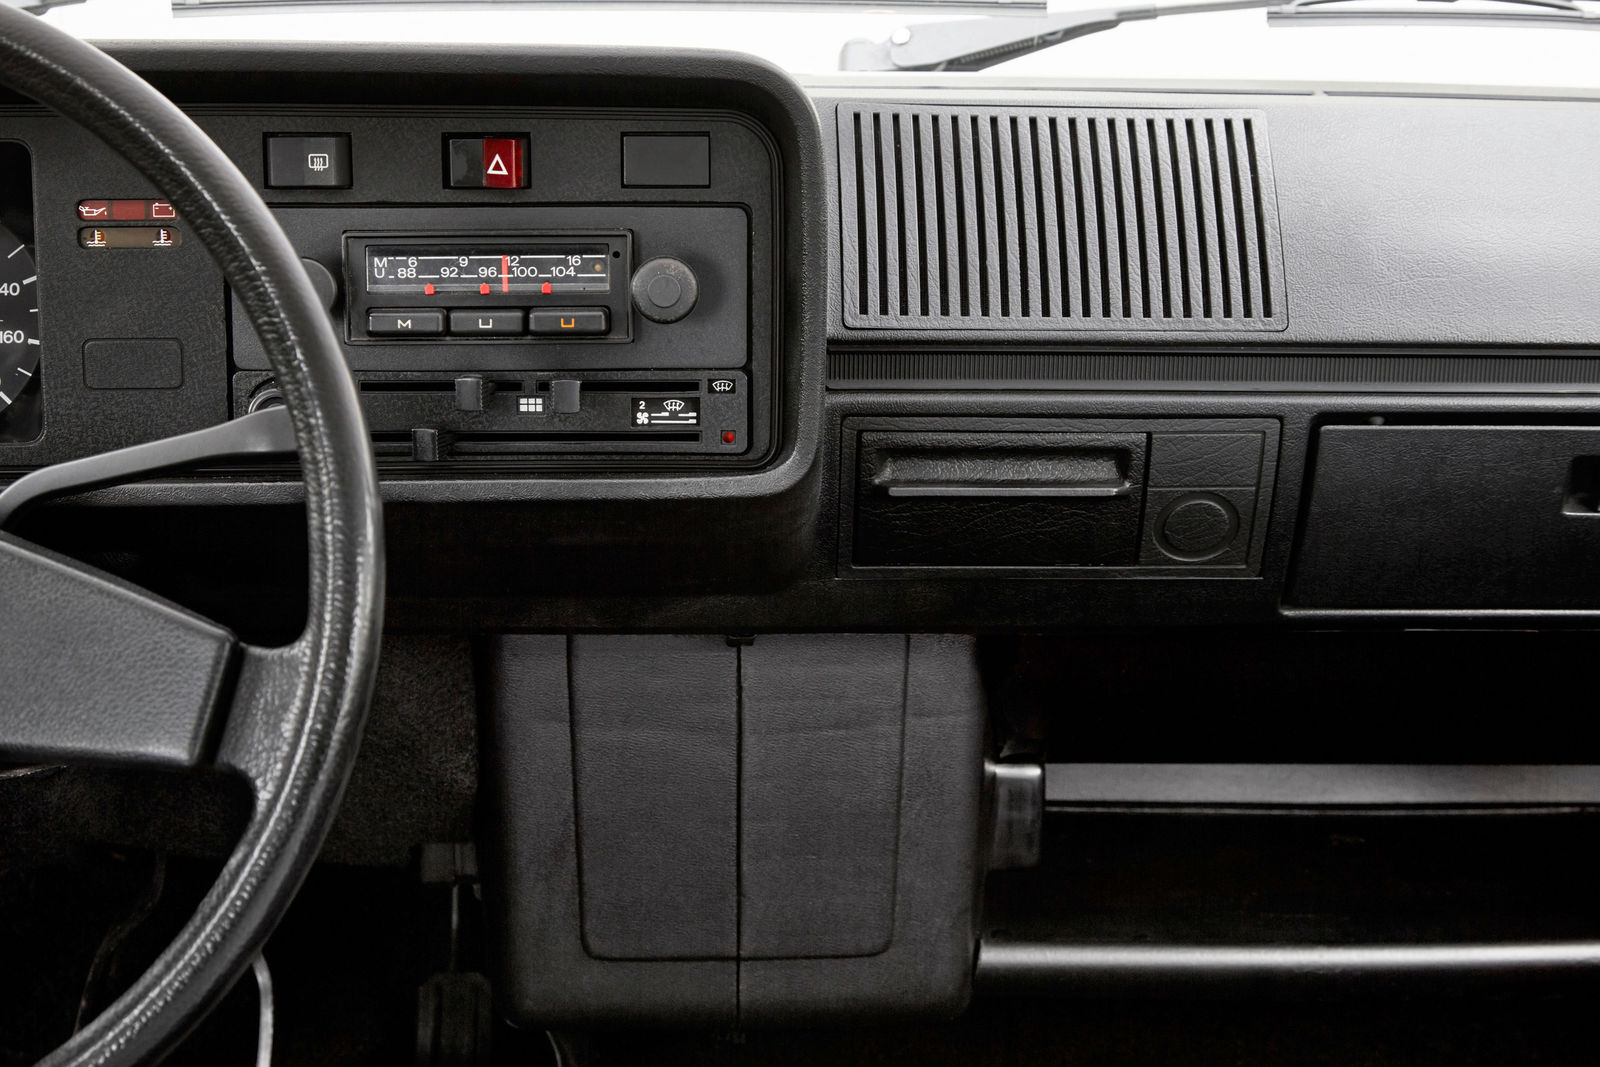 VW MK4 Jetta Golf GTI Passat Factory OEM Cassette Stereo Radio Player